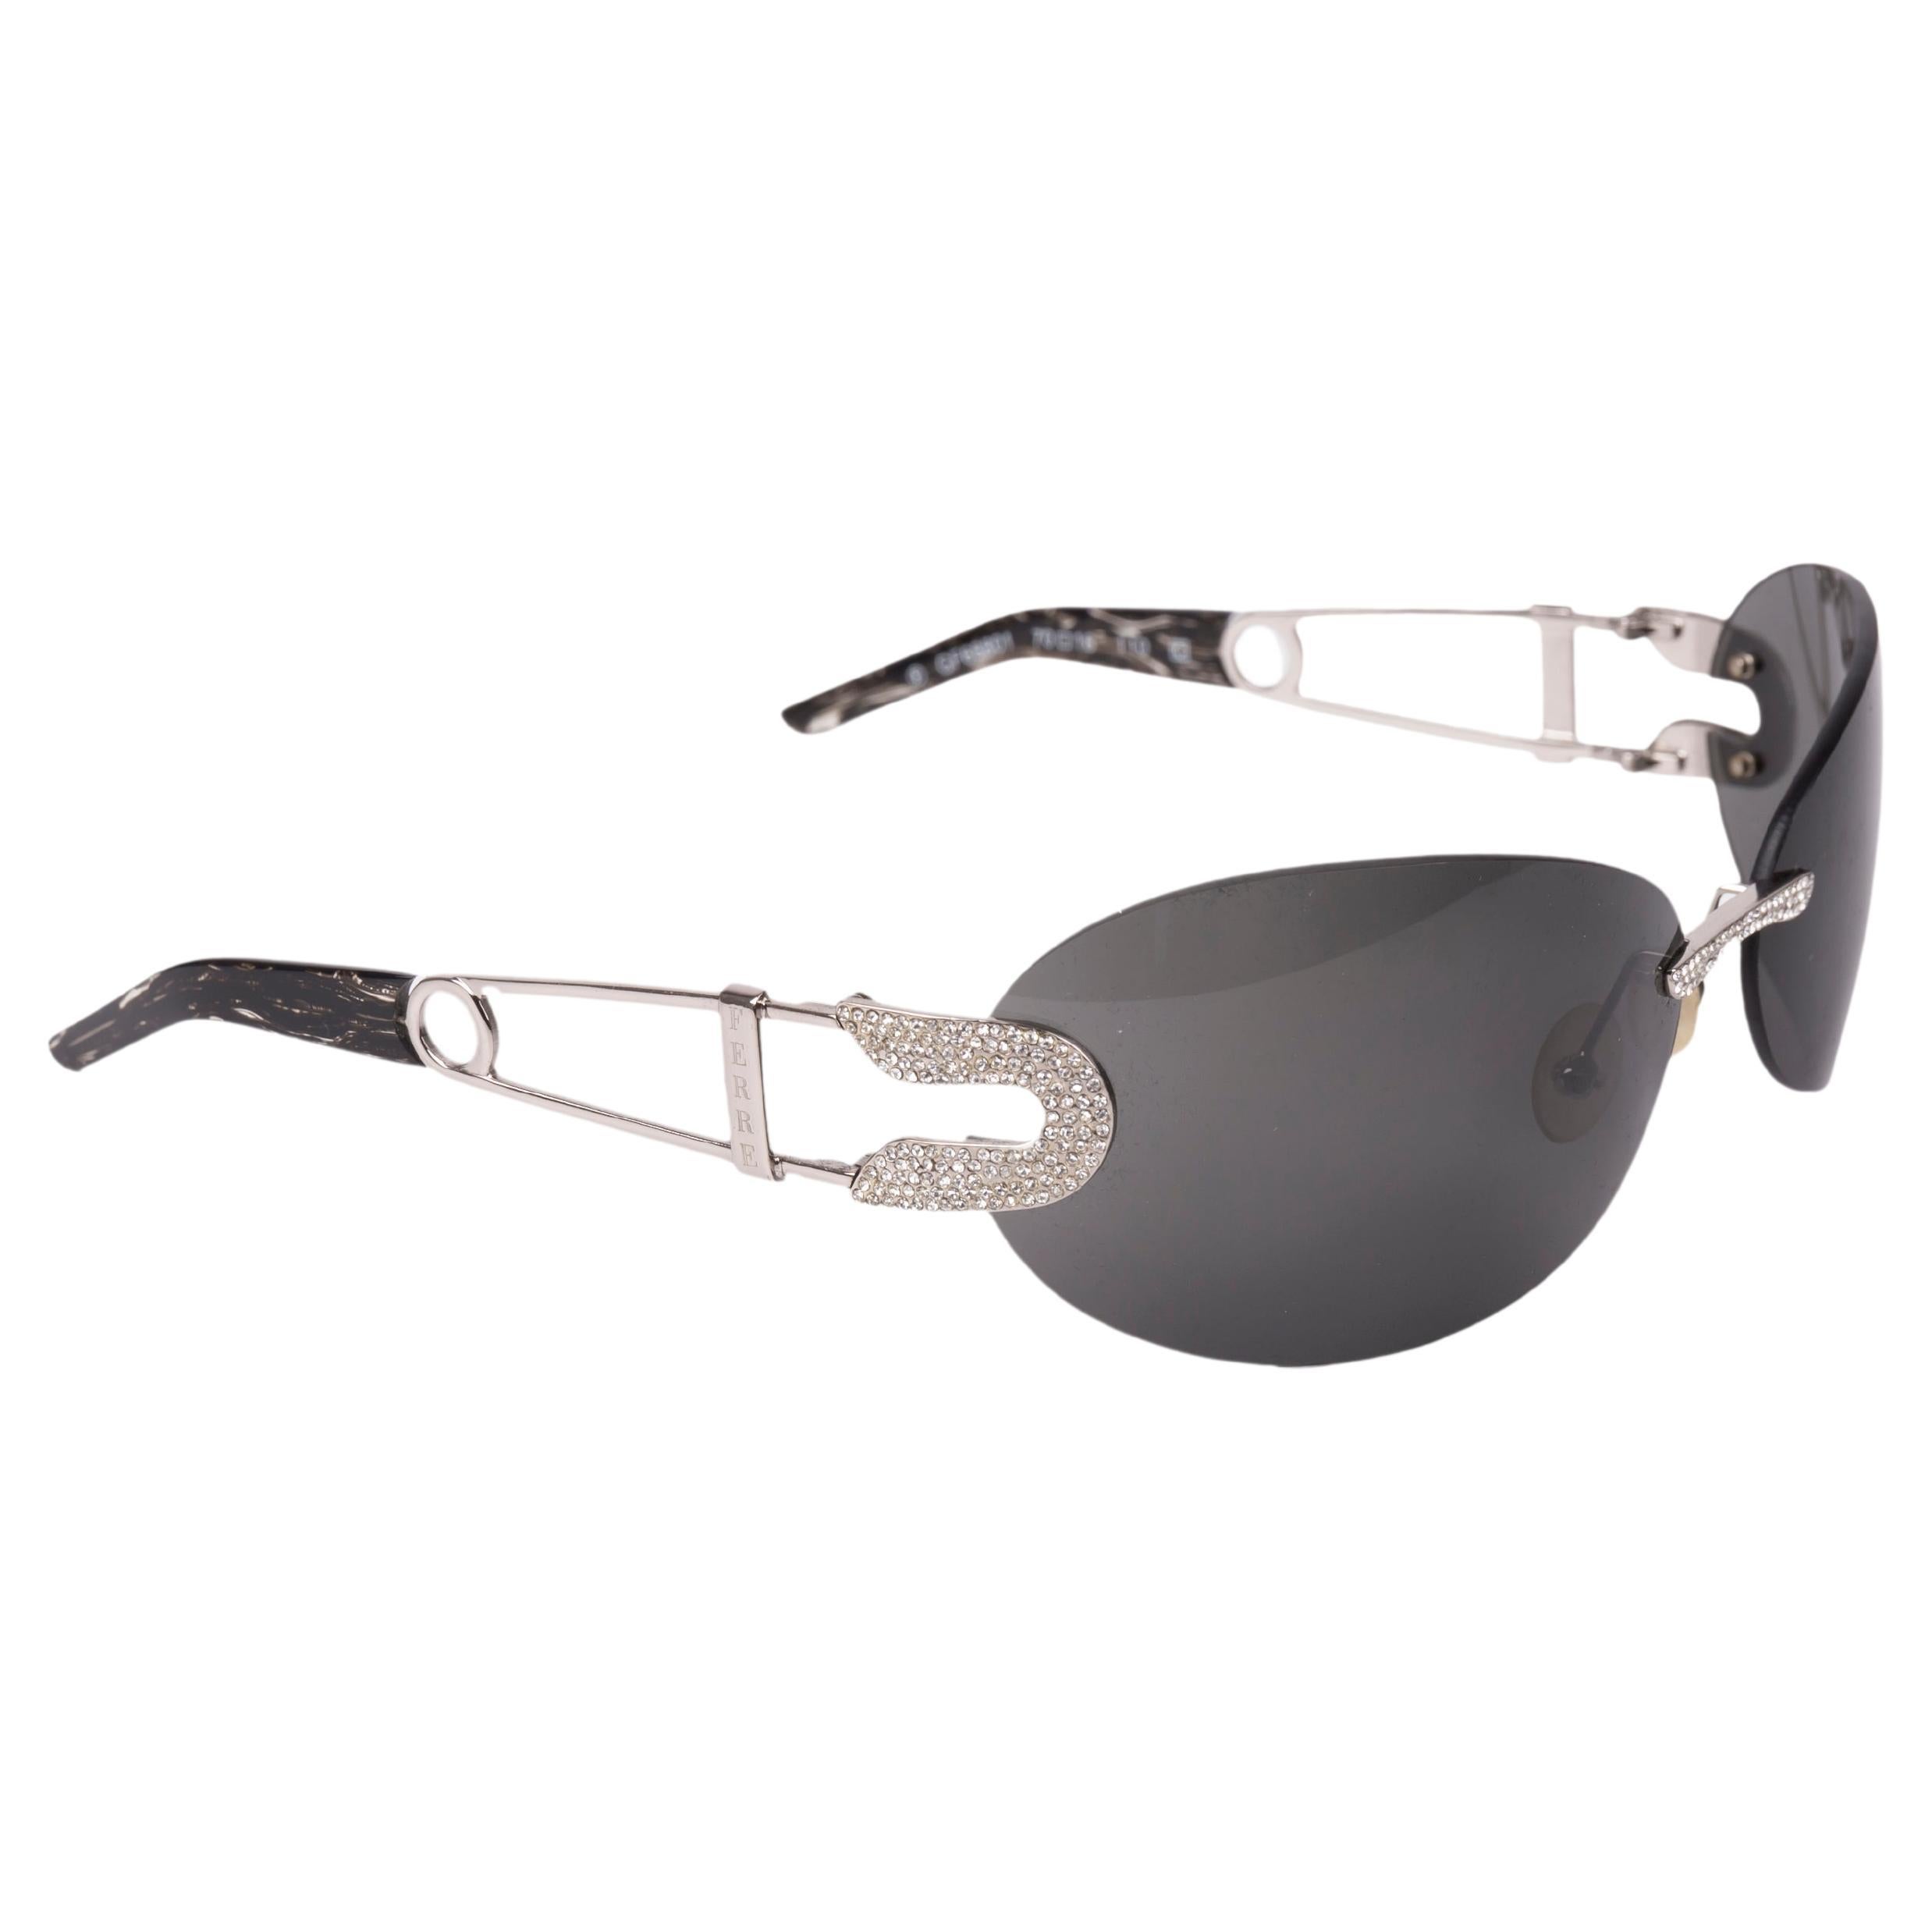 Gianfranco Ferrè Swarovski safety pin black sunglasses For Sale